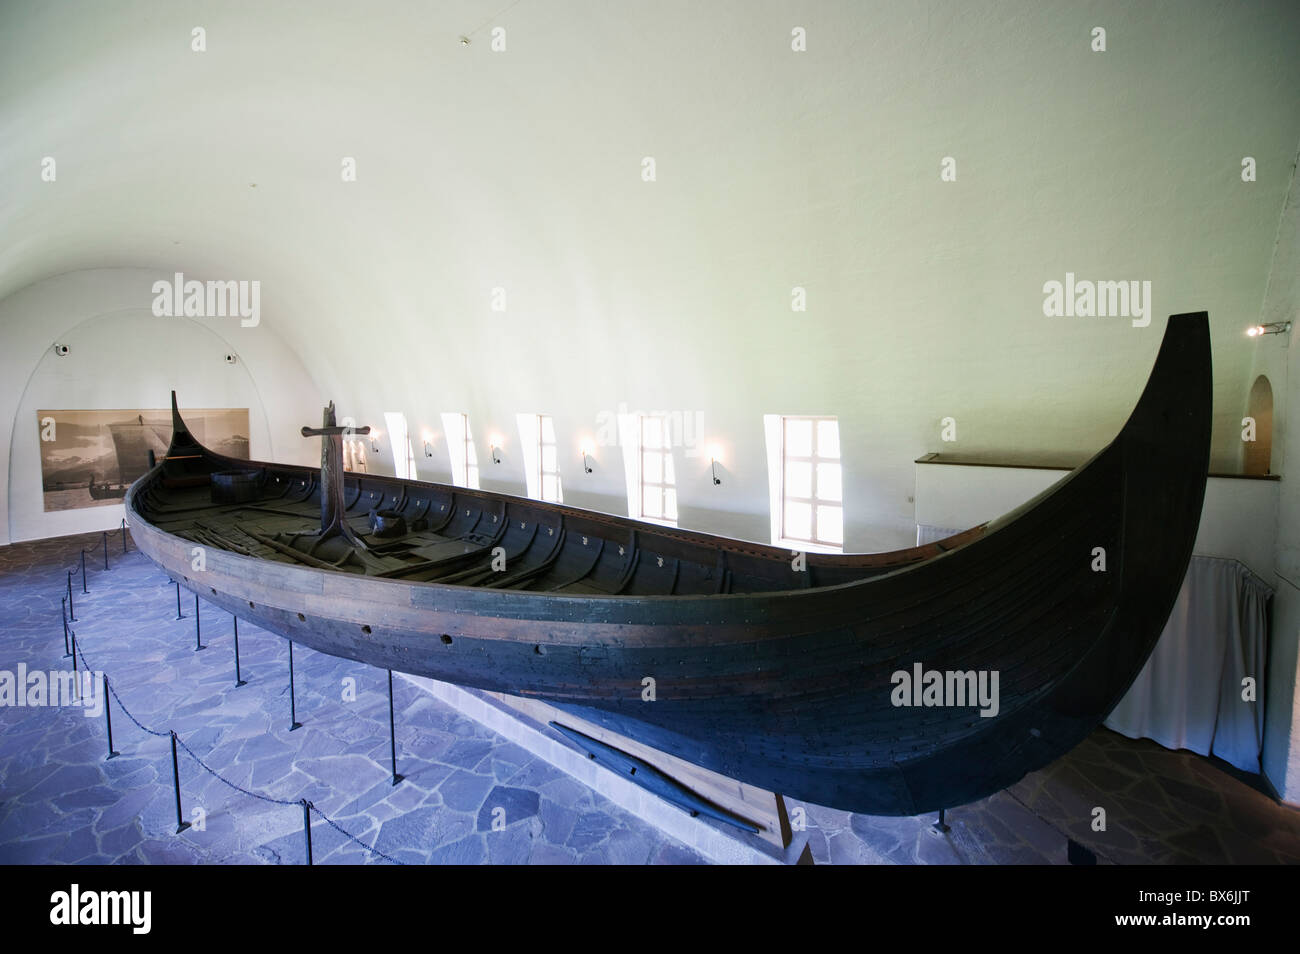 Gokstad Wikingerschiff ausgegraben von Oslofjord, Vikingskipshuset (Wikingerschiffsmuseum), Oslo, Norwegen, Skandinavien, Europa Stockfoto